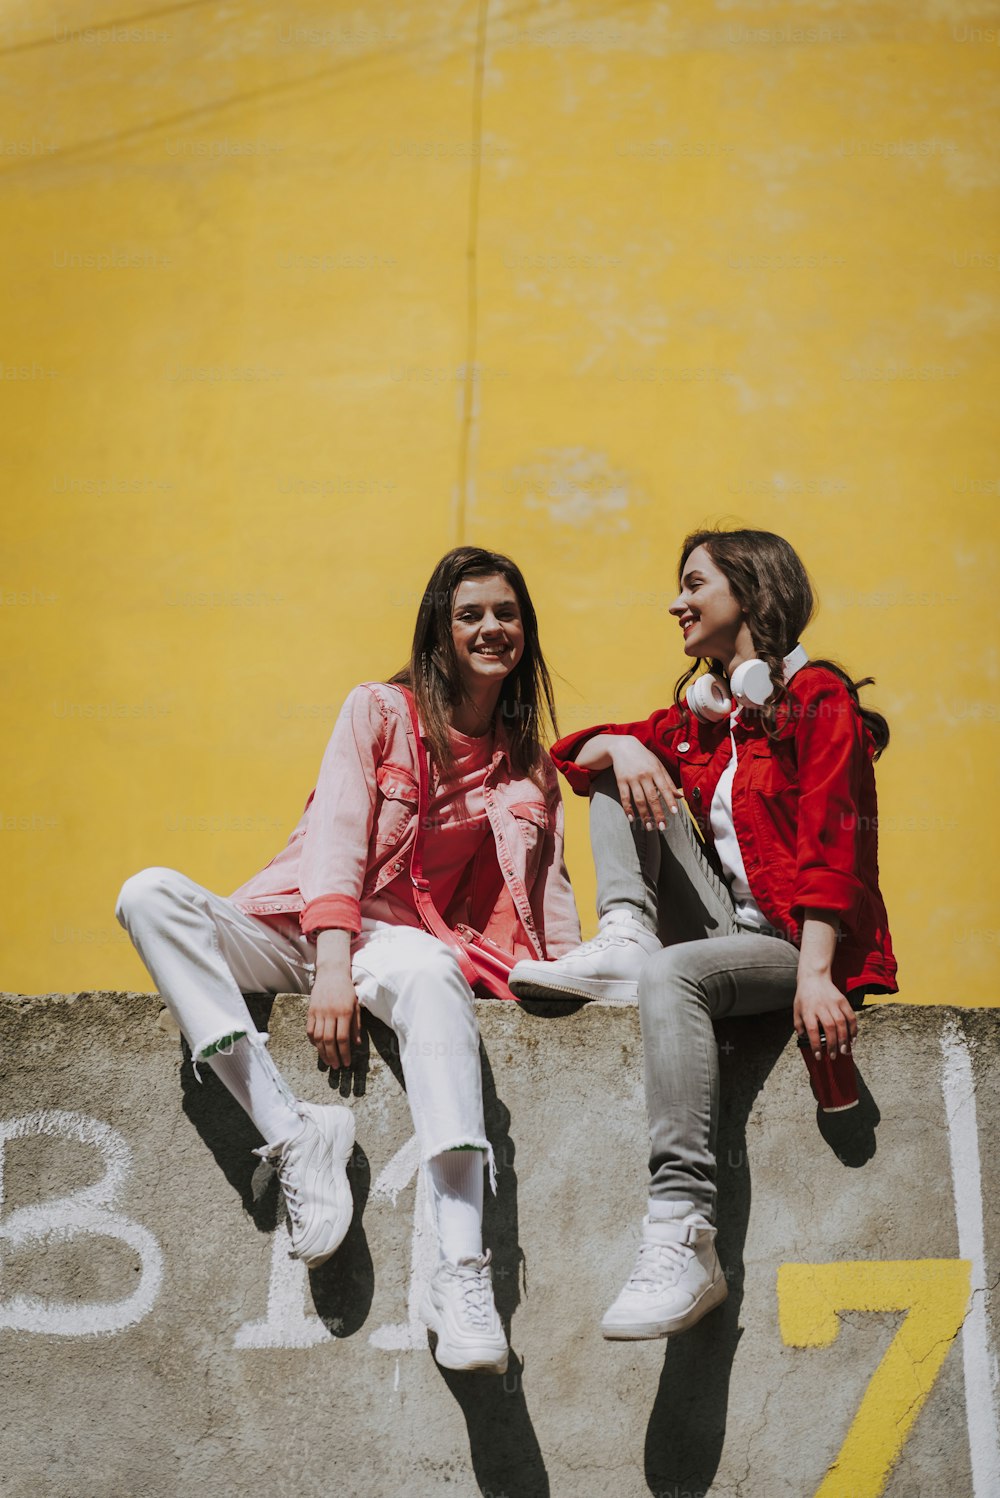 Conceito de estilo de vida urbano. Retrato de comprimento completo de duas jovens senhoras hipster sorridentes felizes descansando juntas na parede do parapeito